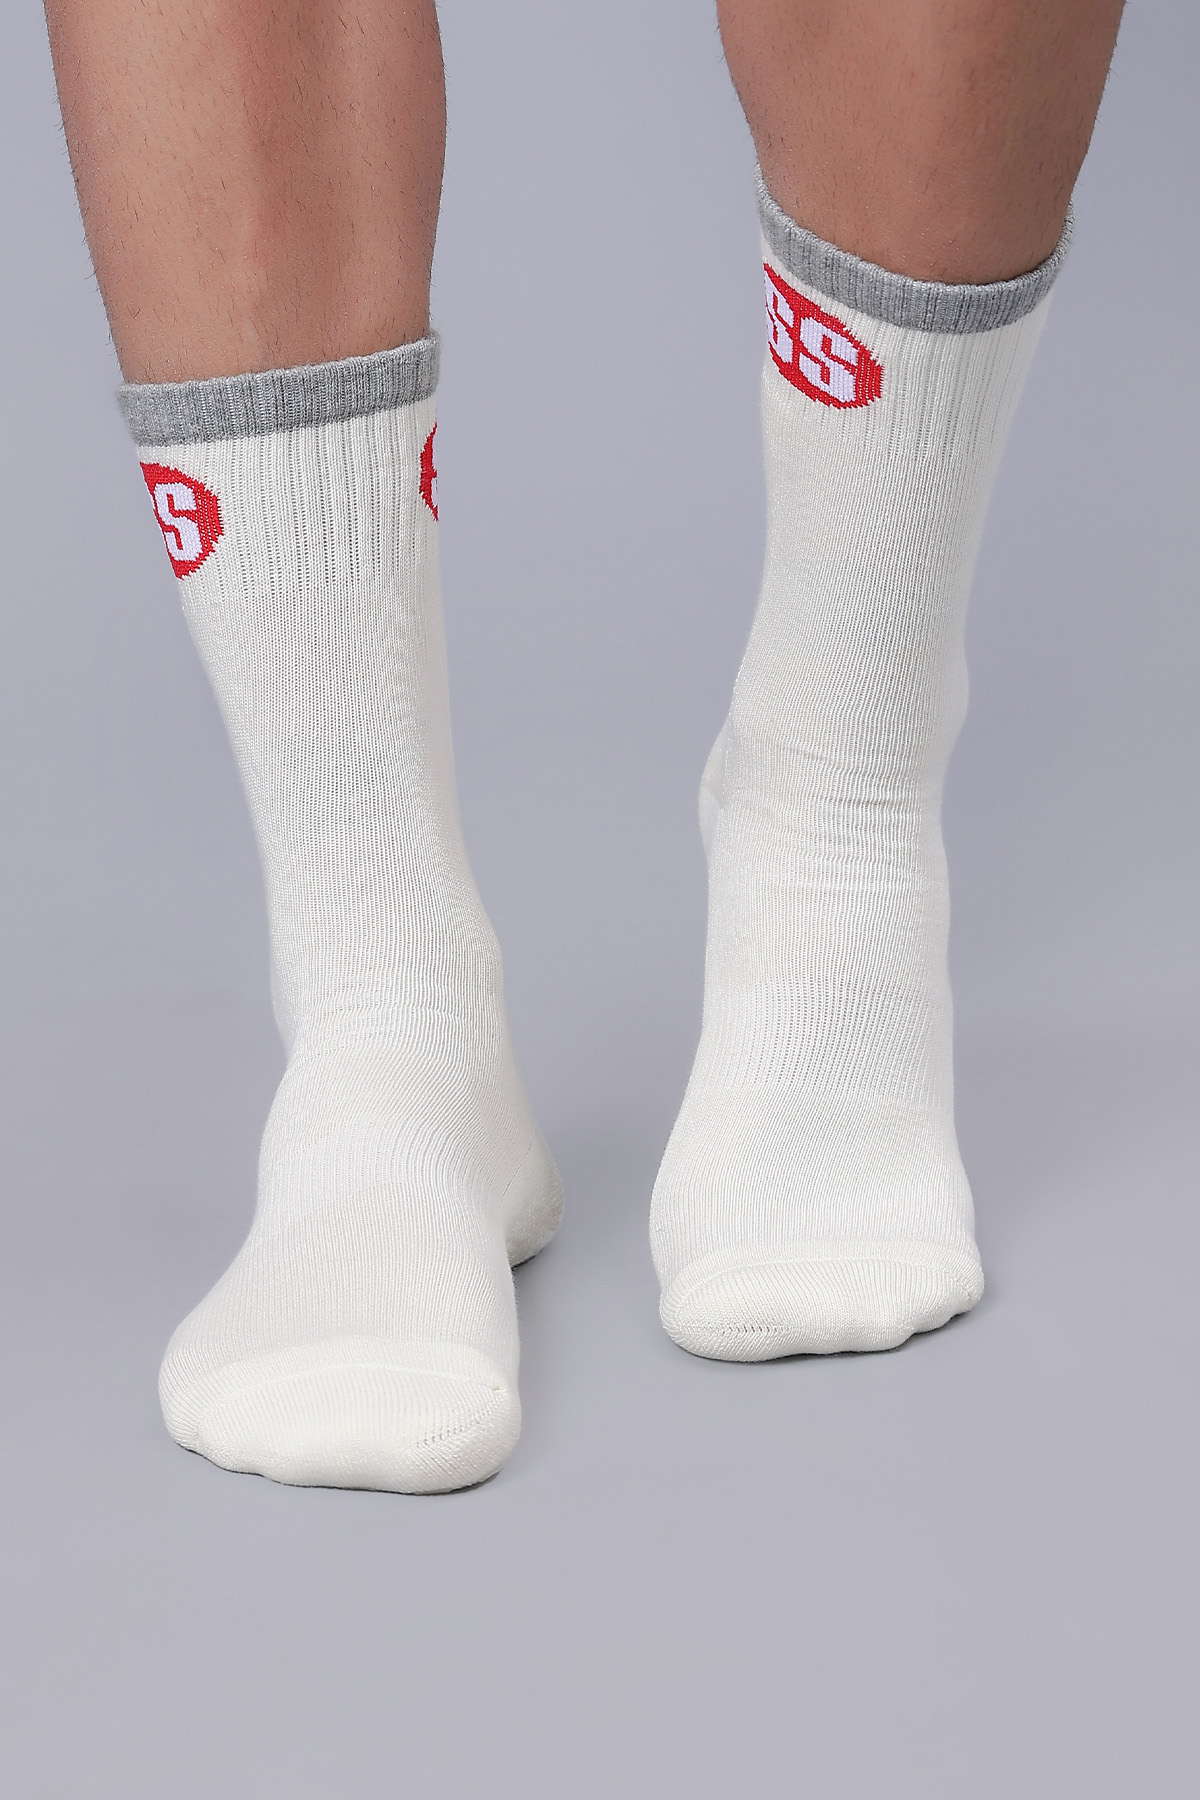 SS Pro Premium Socks - SS Cricket